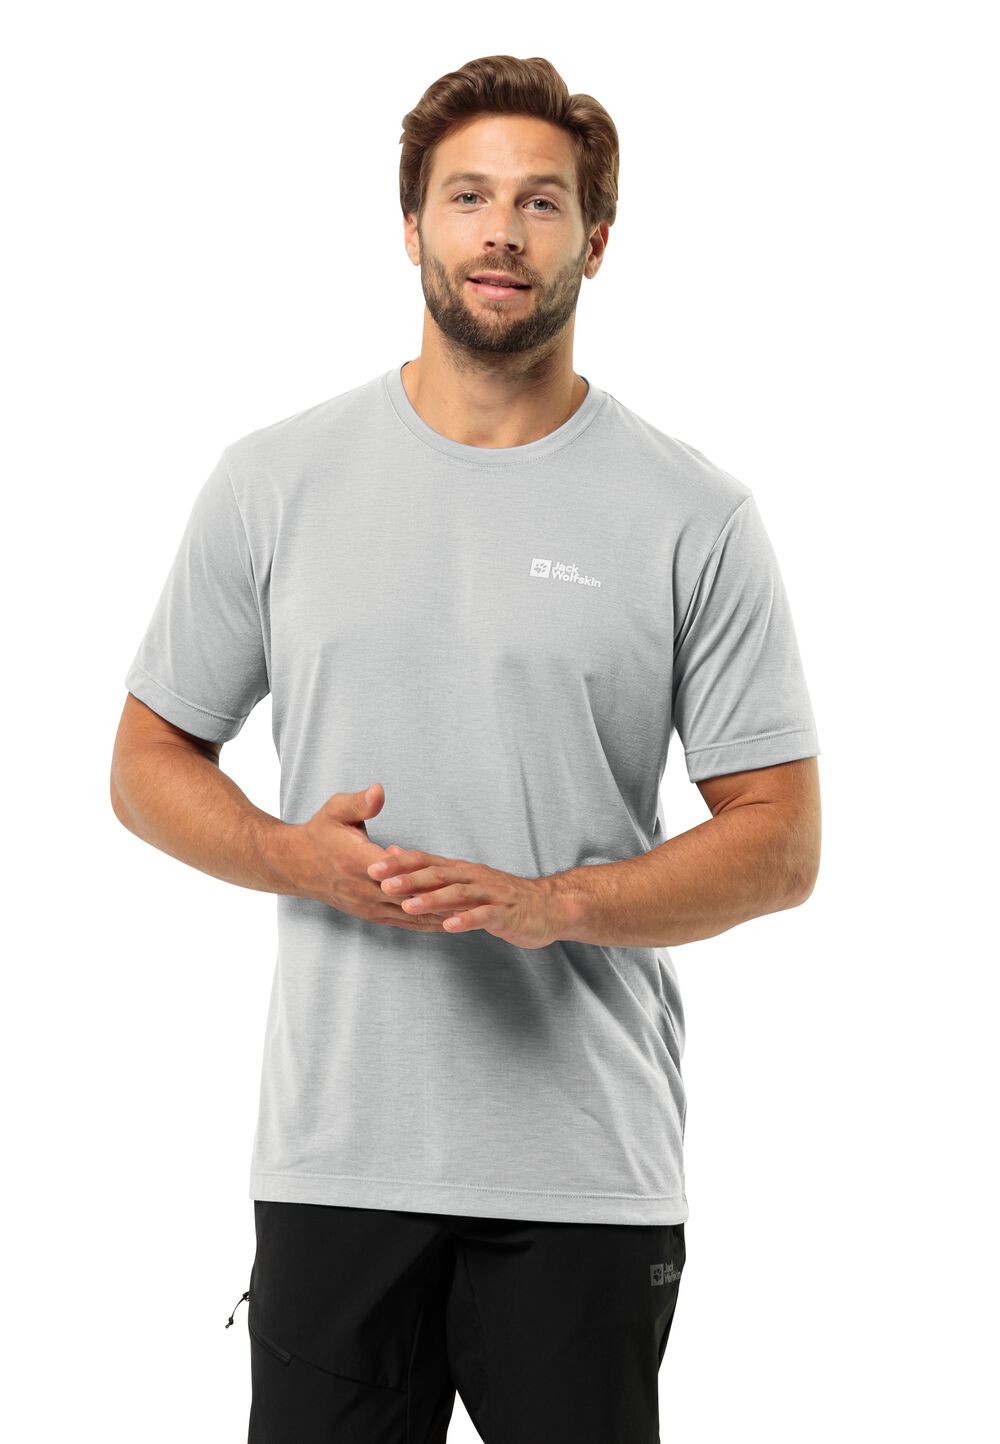 Jack Wolfskin Vonnan S S T-Shirt Men Functioneel shirt Heren 3XL grijs cool grey